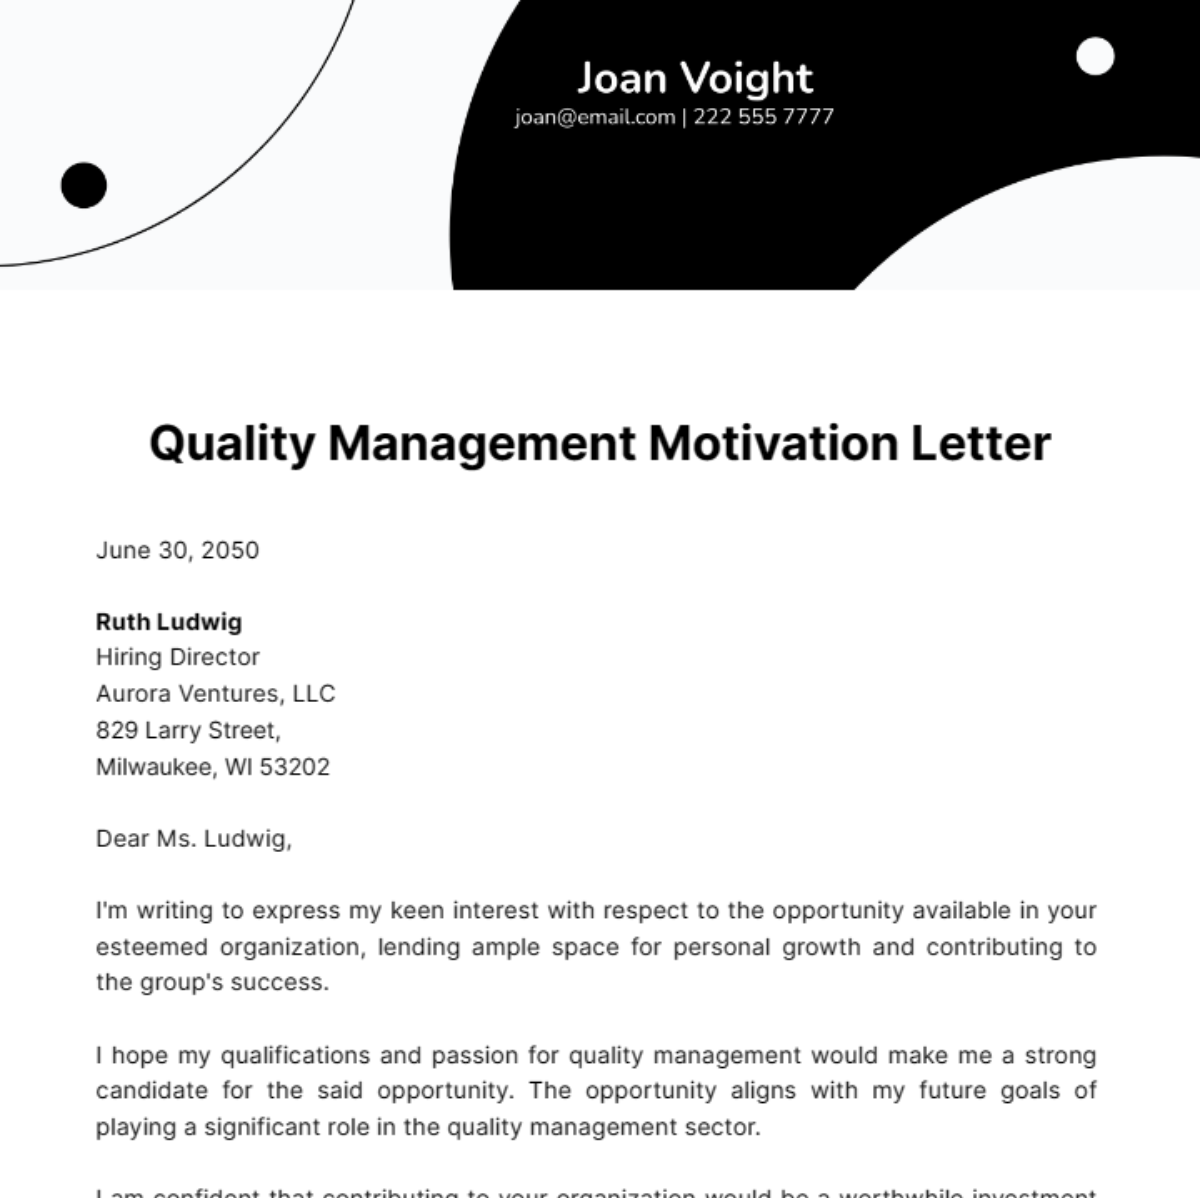 Quality Management Motivation Letter Template